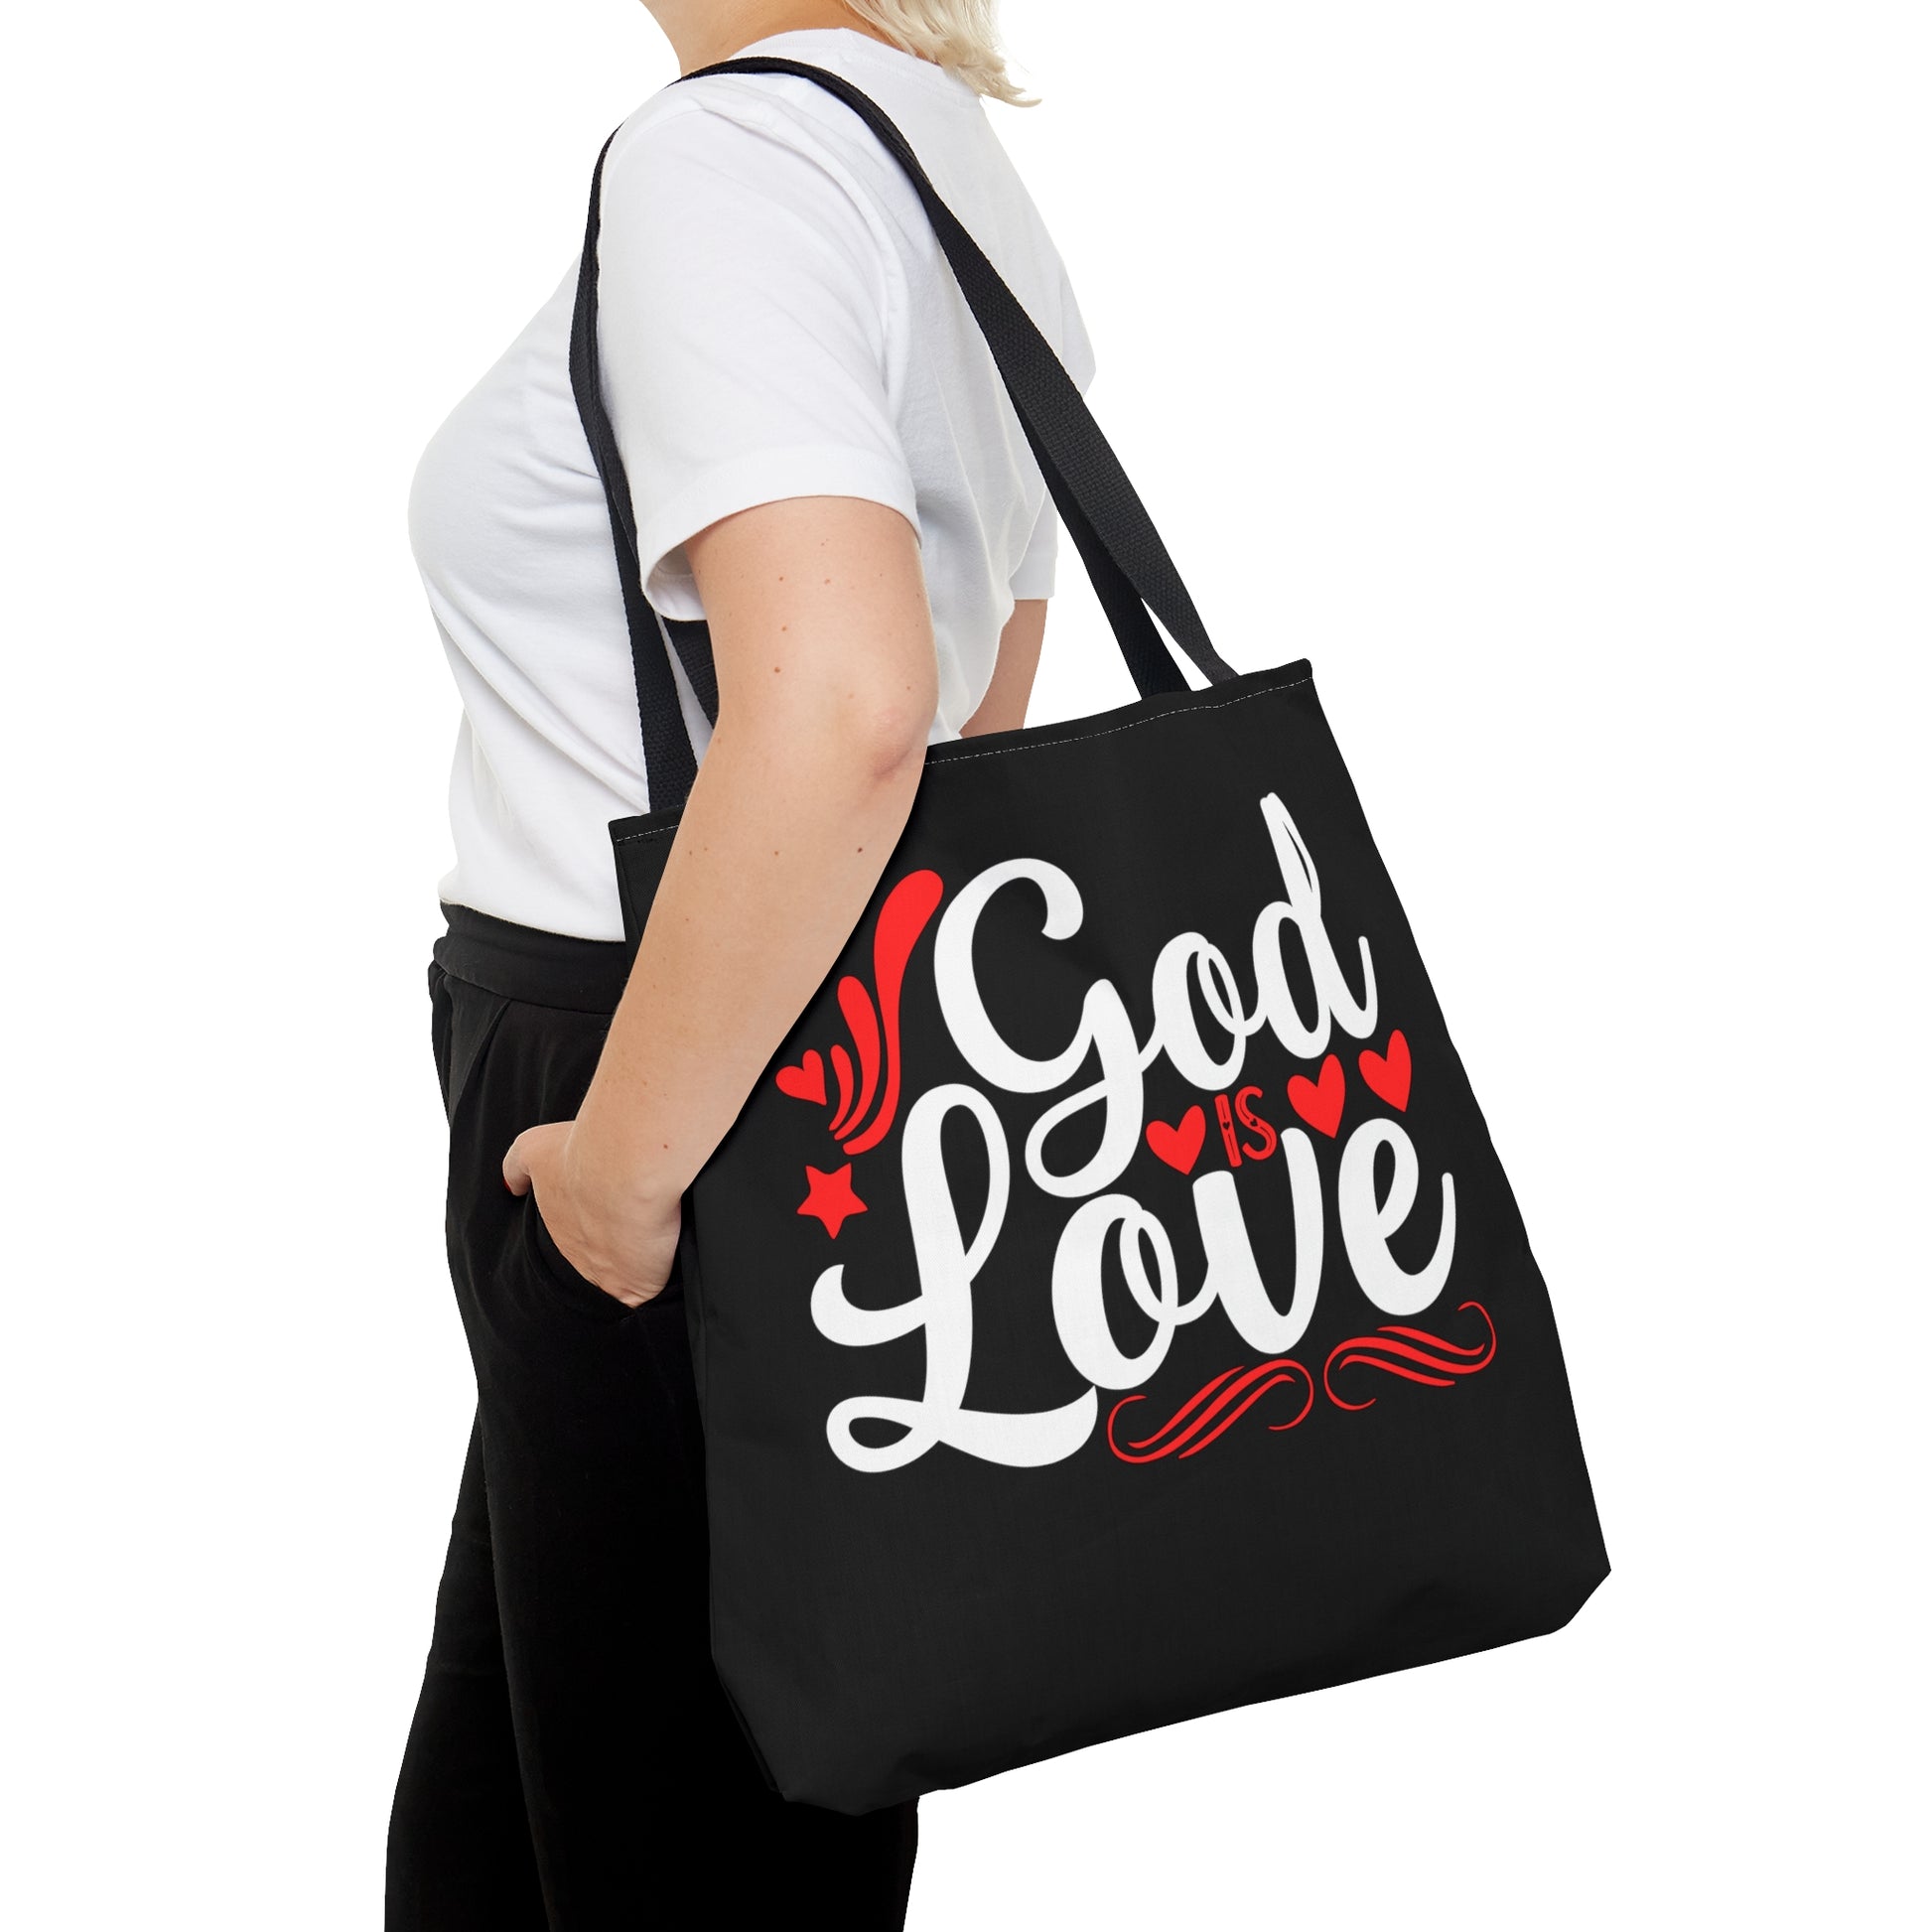 God Is Love Christian Tote Bag Printify